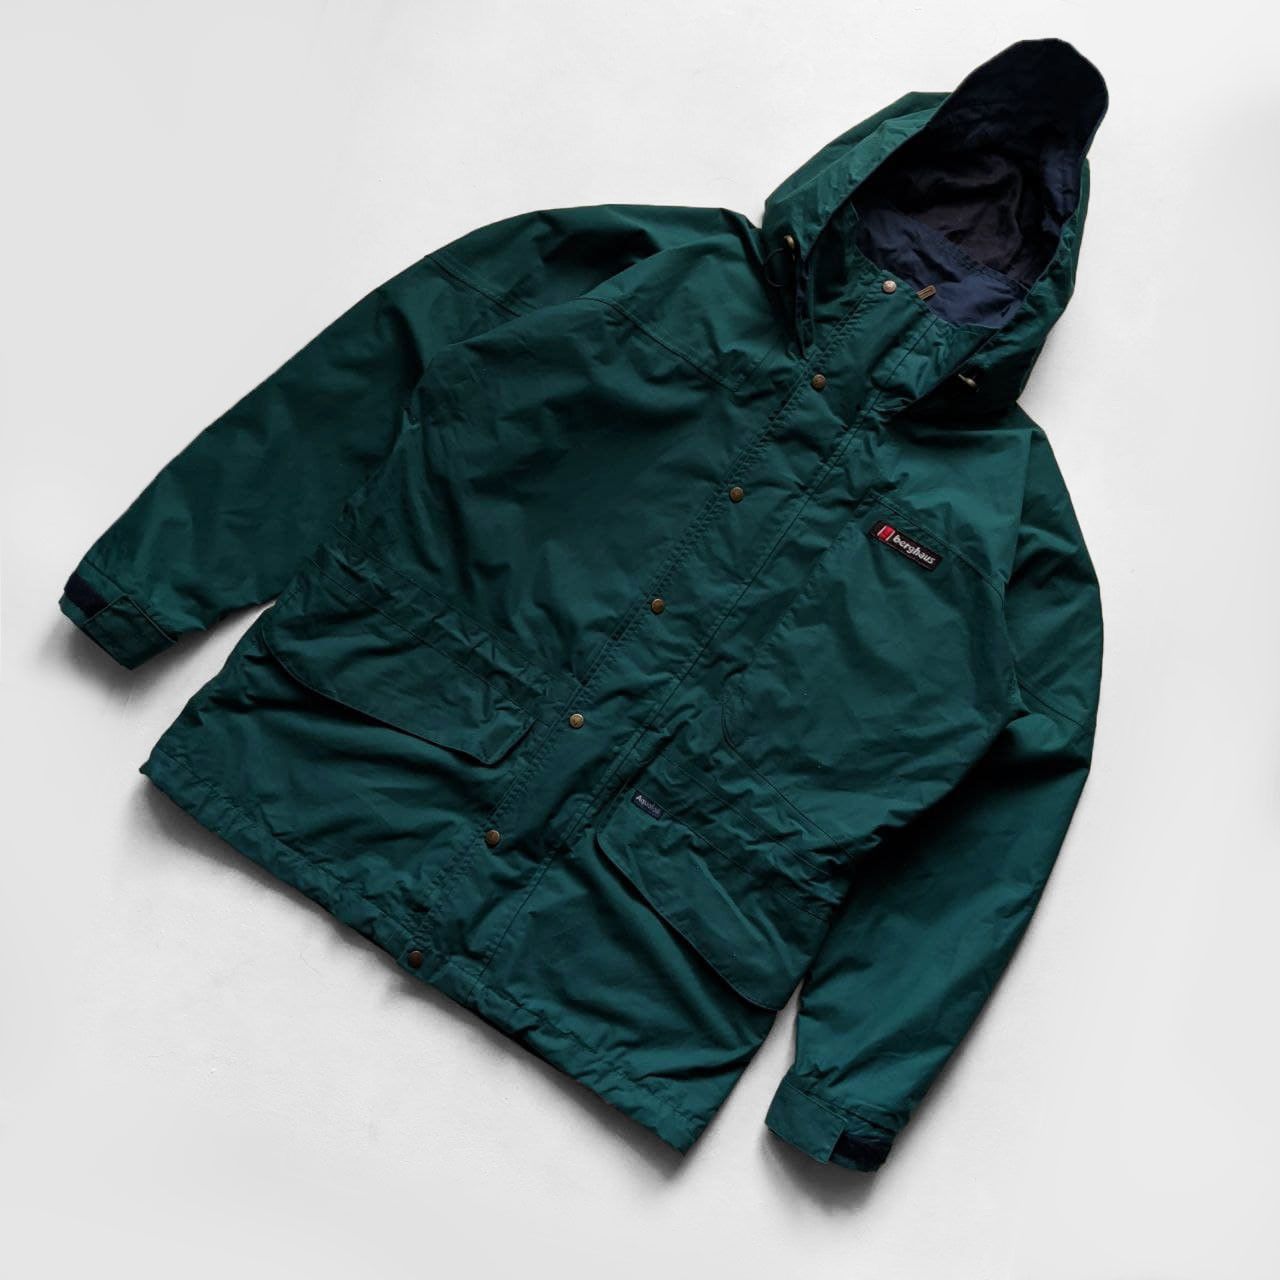 Vintage Berghaus vintage membrane jacket 90s aquafoil green | Grailed